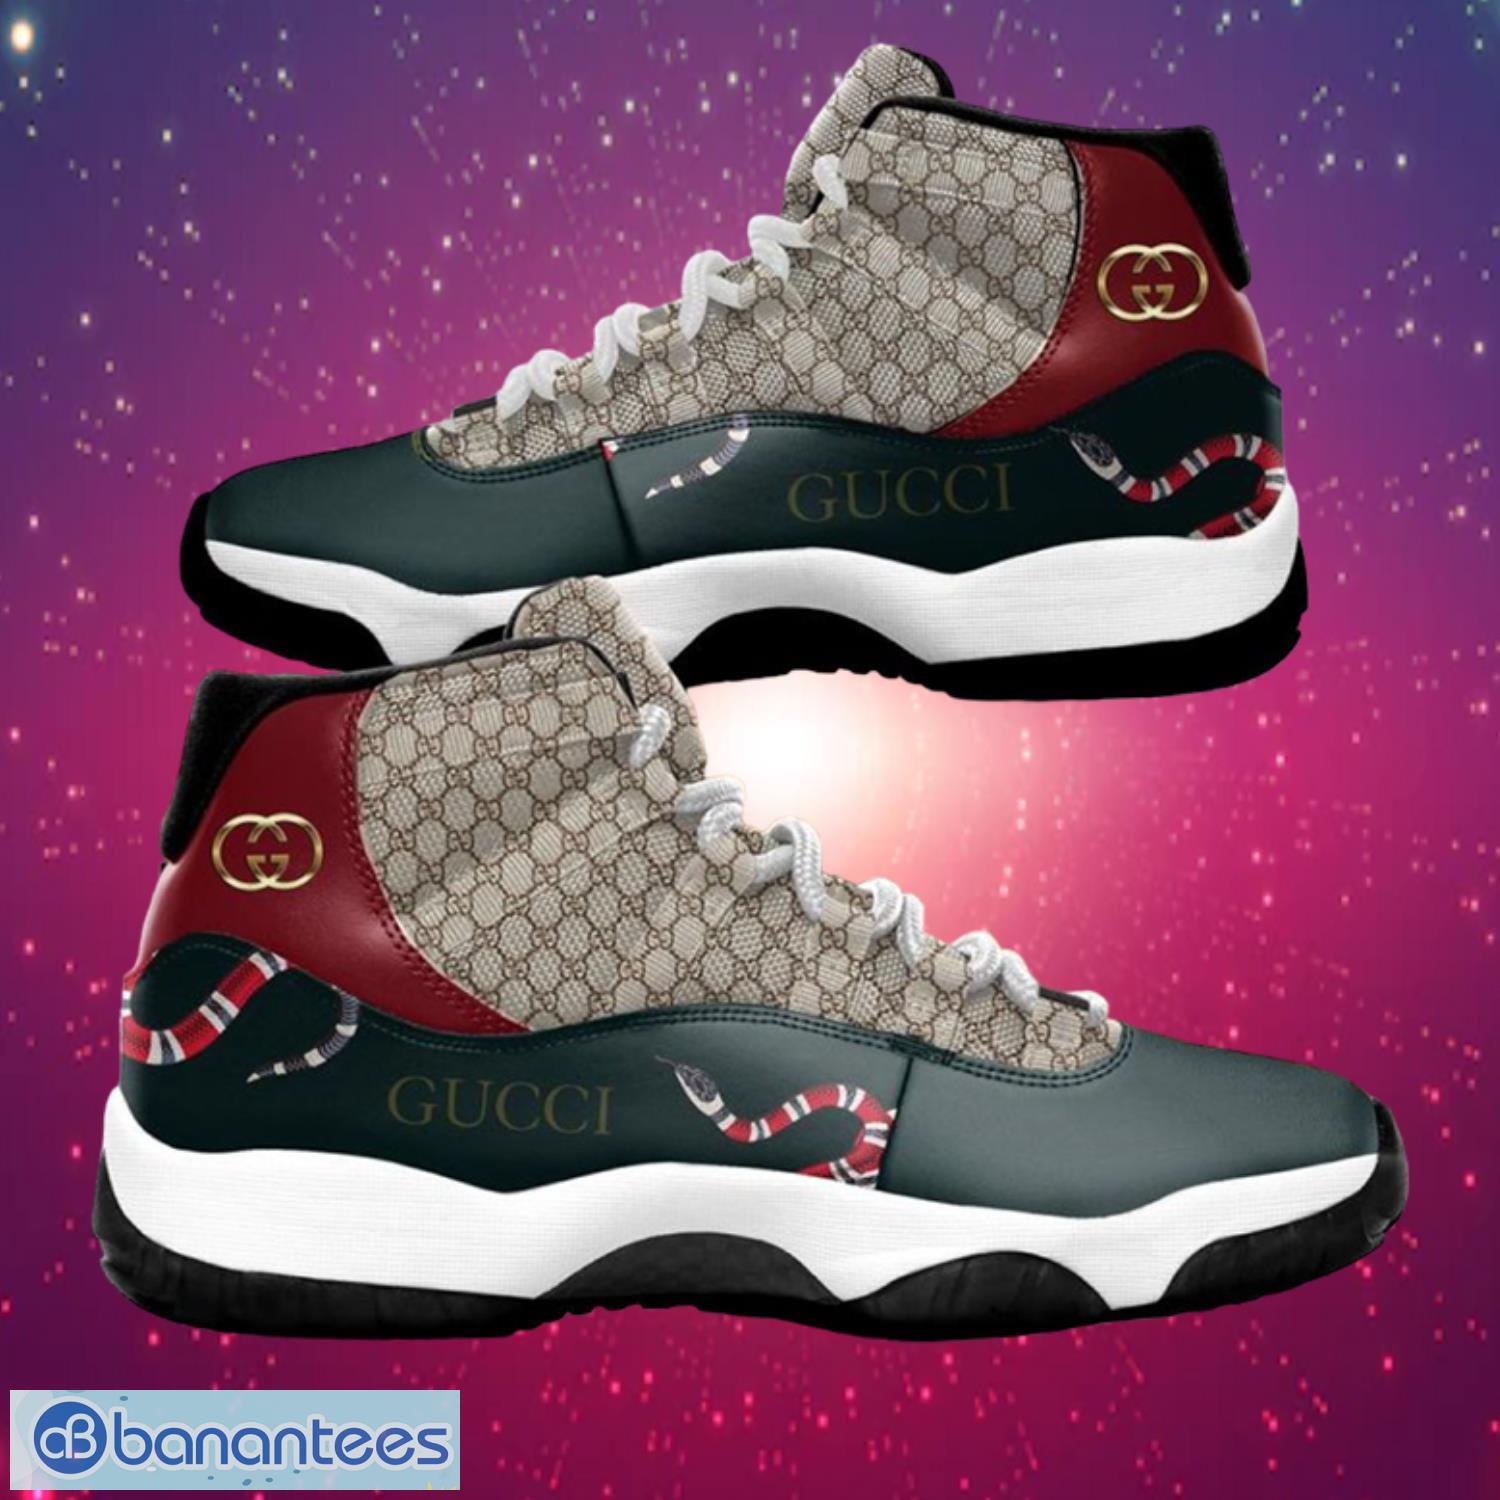 Gucci Coral Snake Air Jordan 11 Shoes Product Photo 1